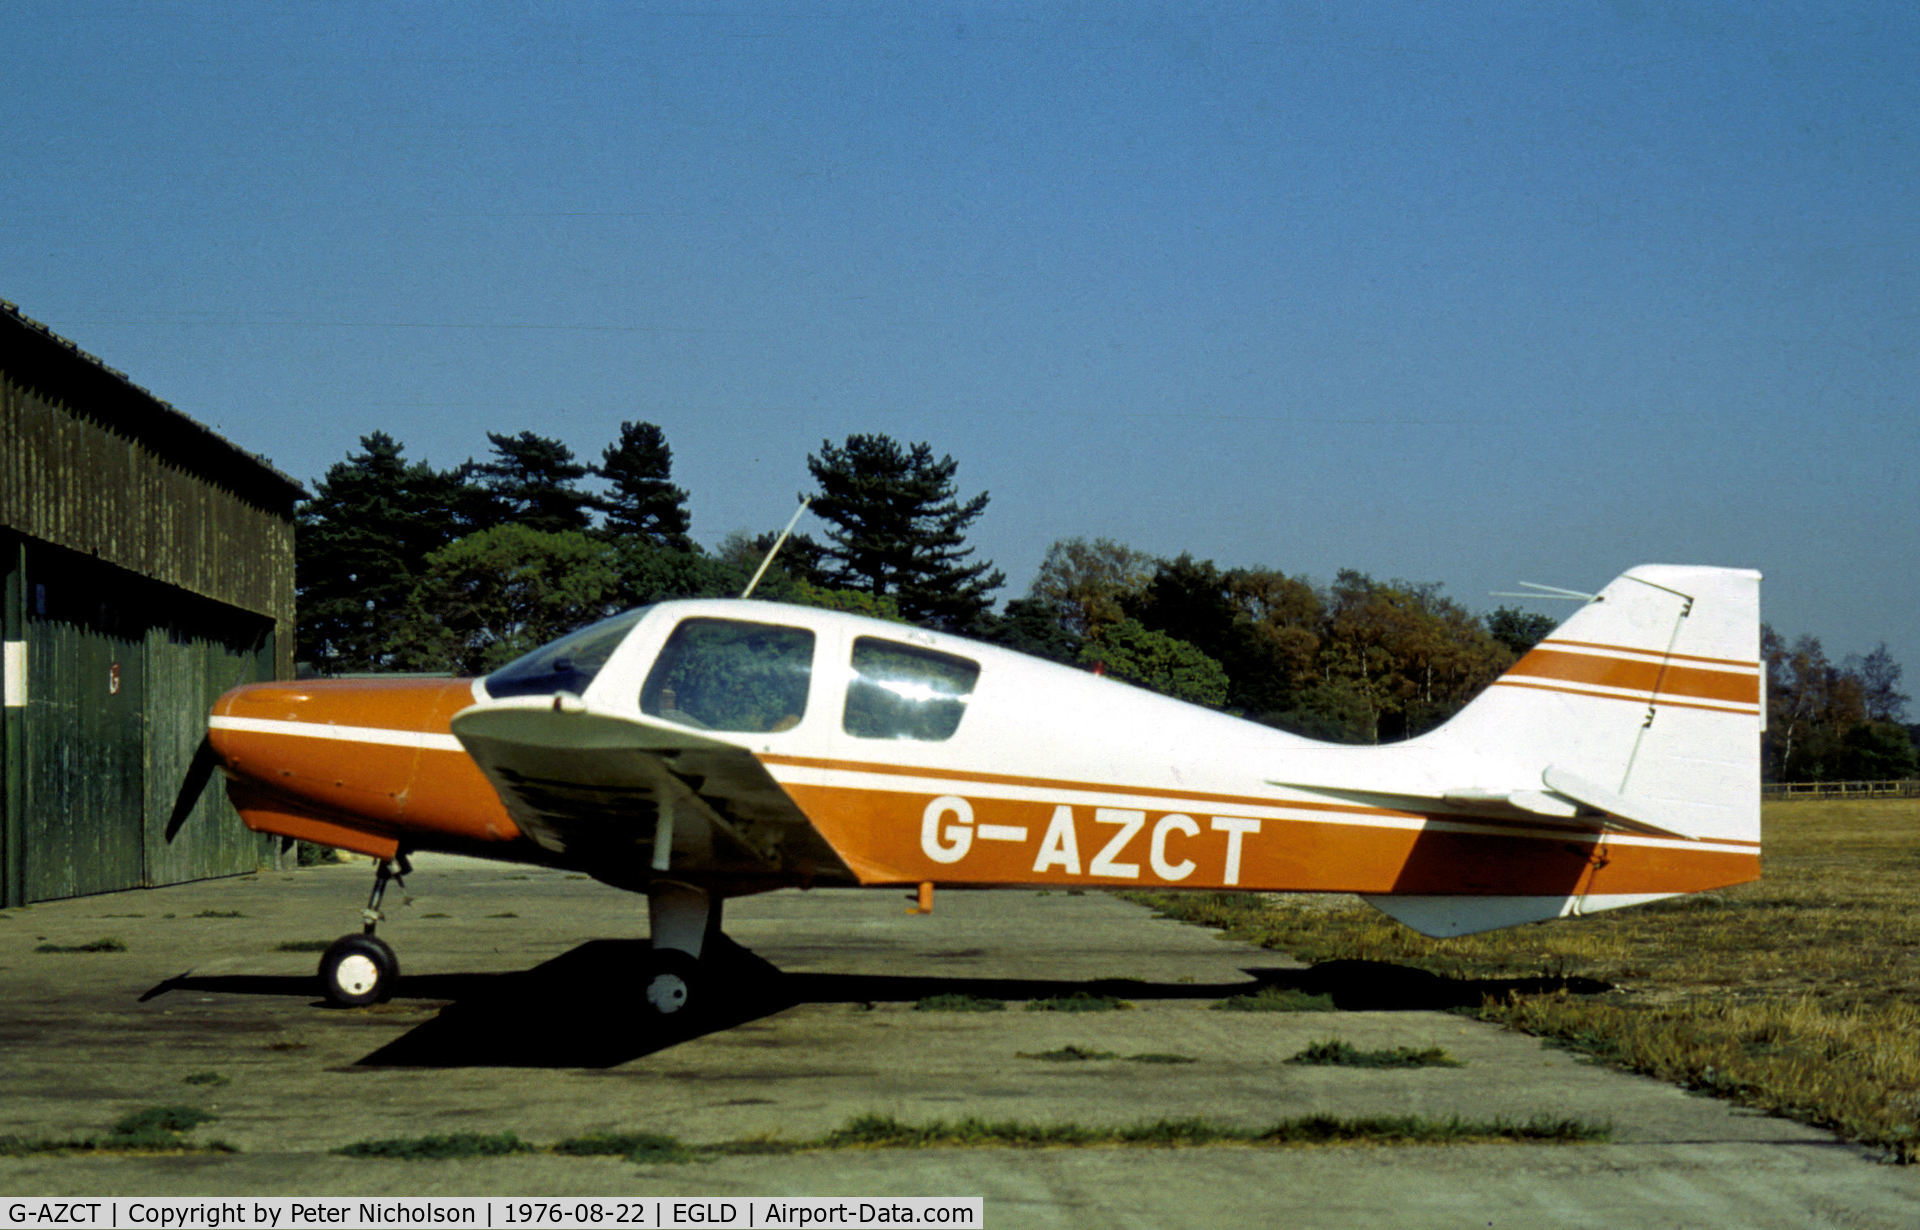 G-AZCT, 1970 Beagle B-121 Pup Series 1 (Pup 100) C/N B121-161, Beagle Pup 1 as seen at Denham Airfield in the Summer of 1976.